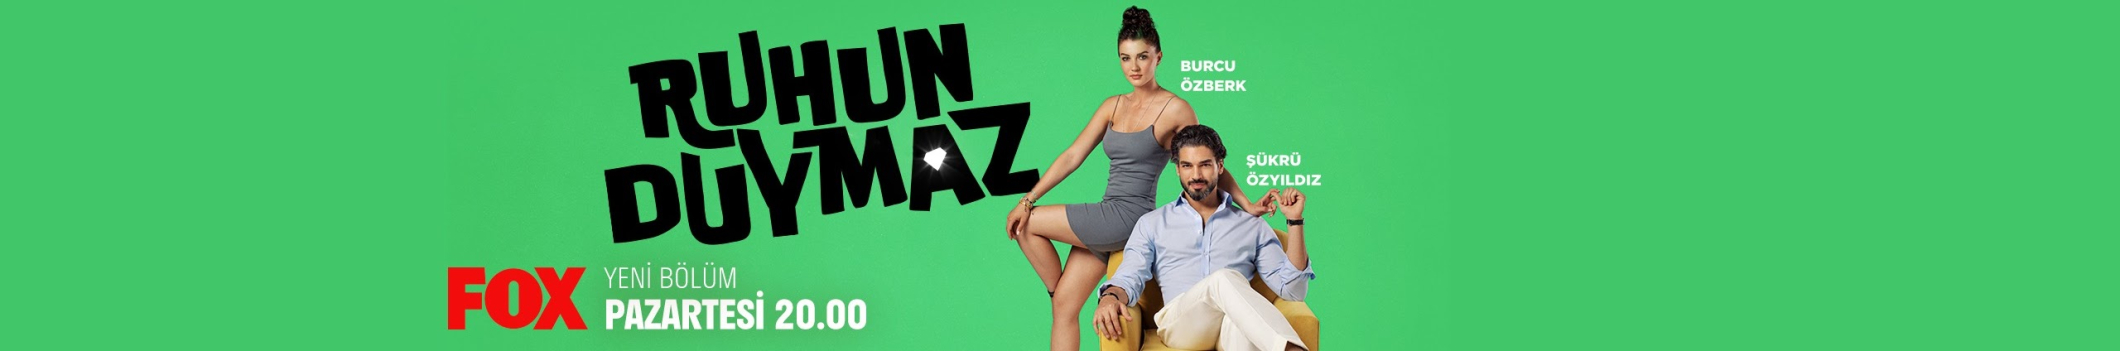 Ruhun Duymaz Season 1 English subtitles - Love Undercover